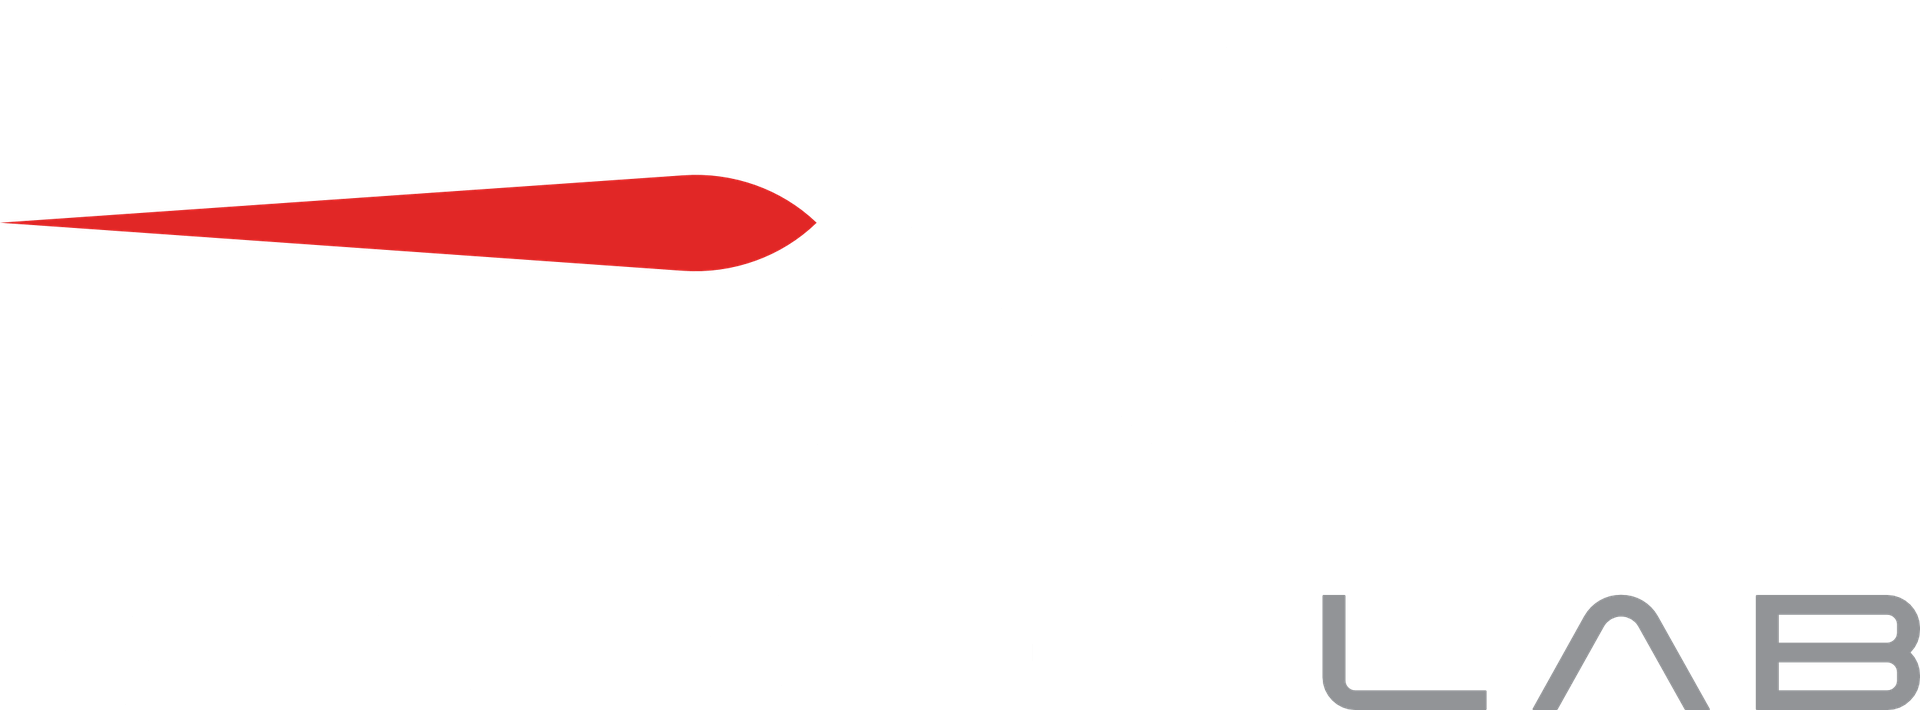 Rocket Lab Ltd